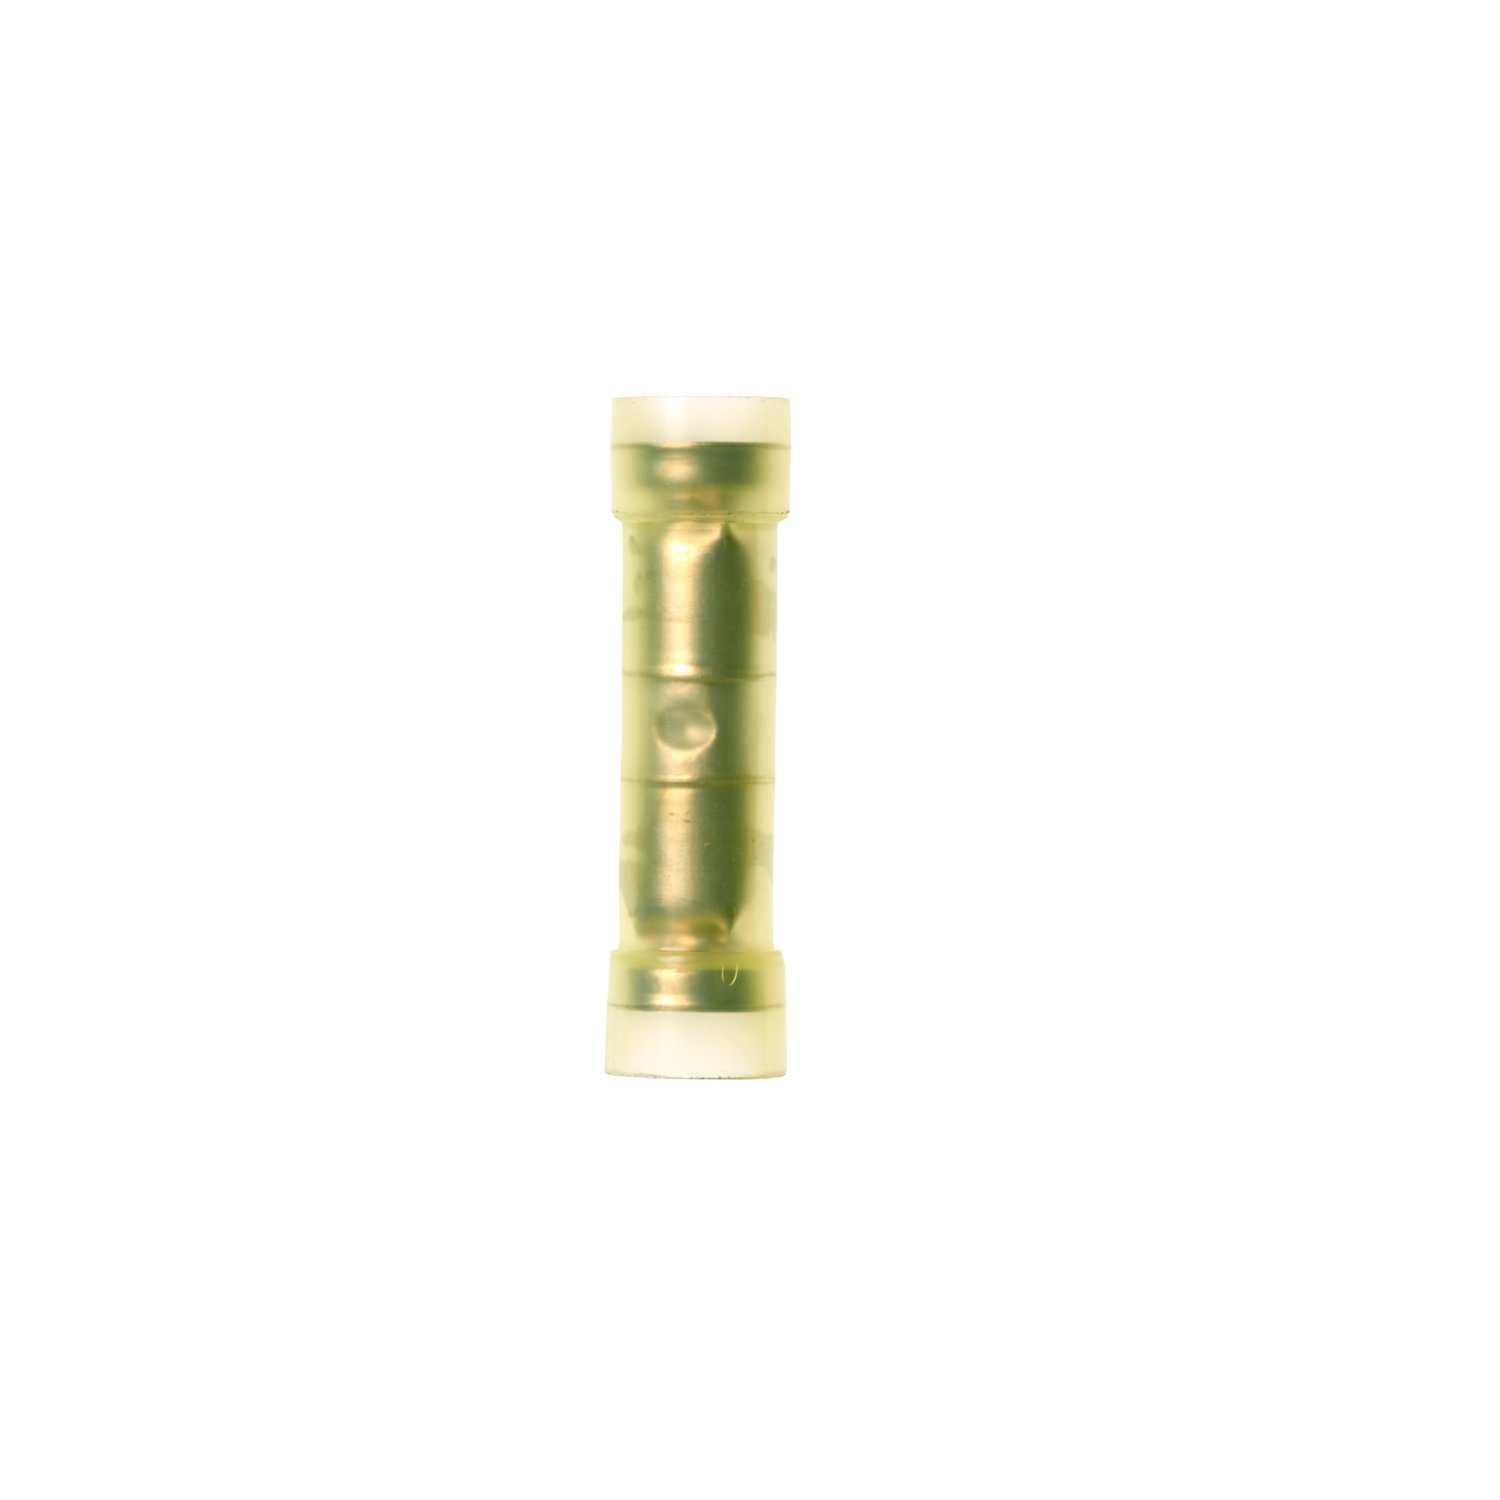 Hot Glue Gun with Small-bore Copper Nozzle Tip 1.0mm Mini Glue Gun Craft  Repair Hot Melting Heat Gun Pneumatic DIY Tools Includes 5 Pcs Glue Sticks